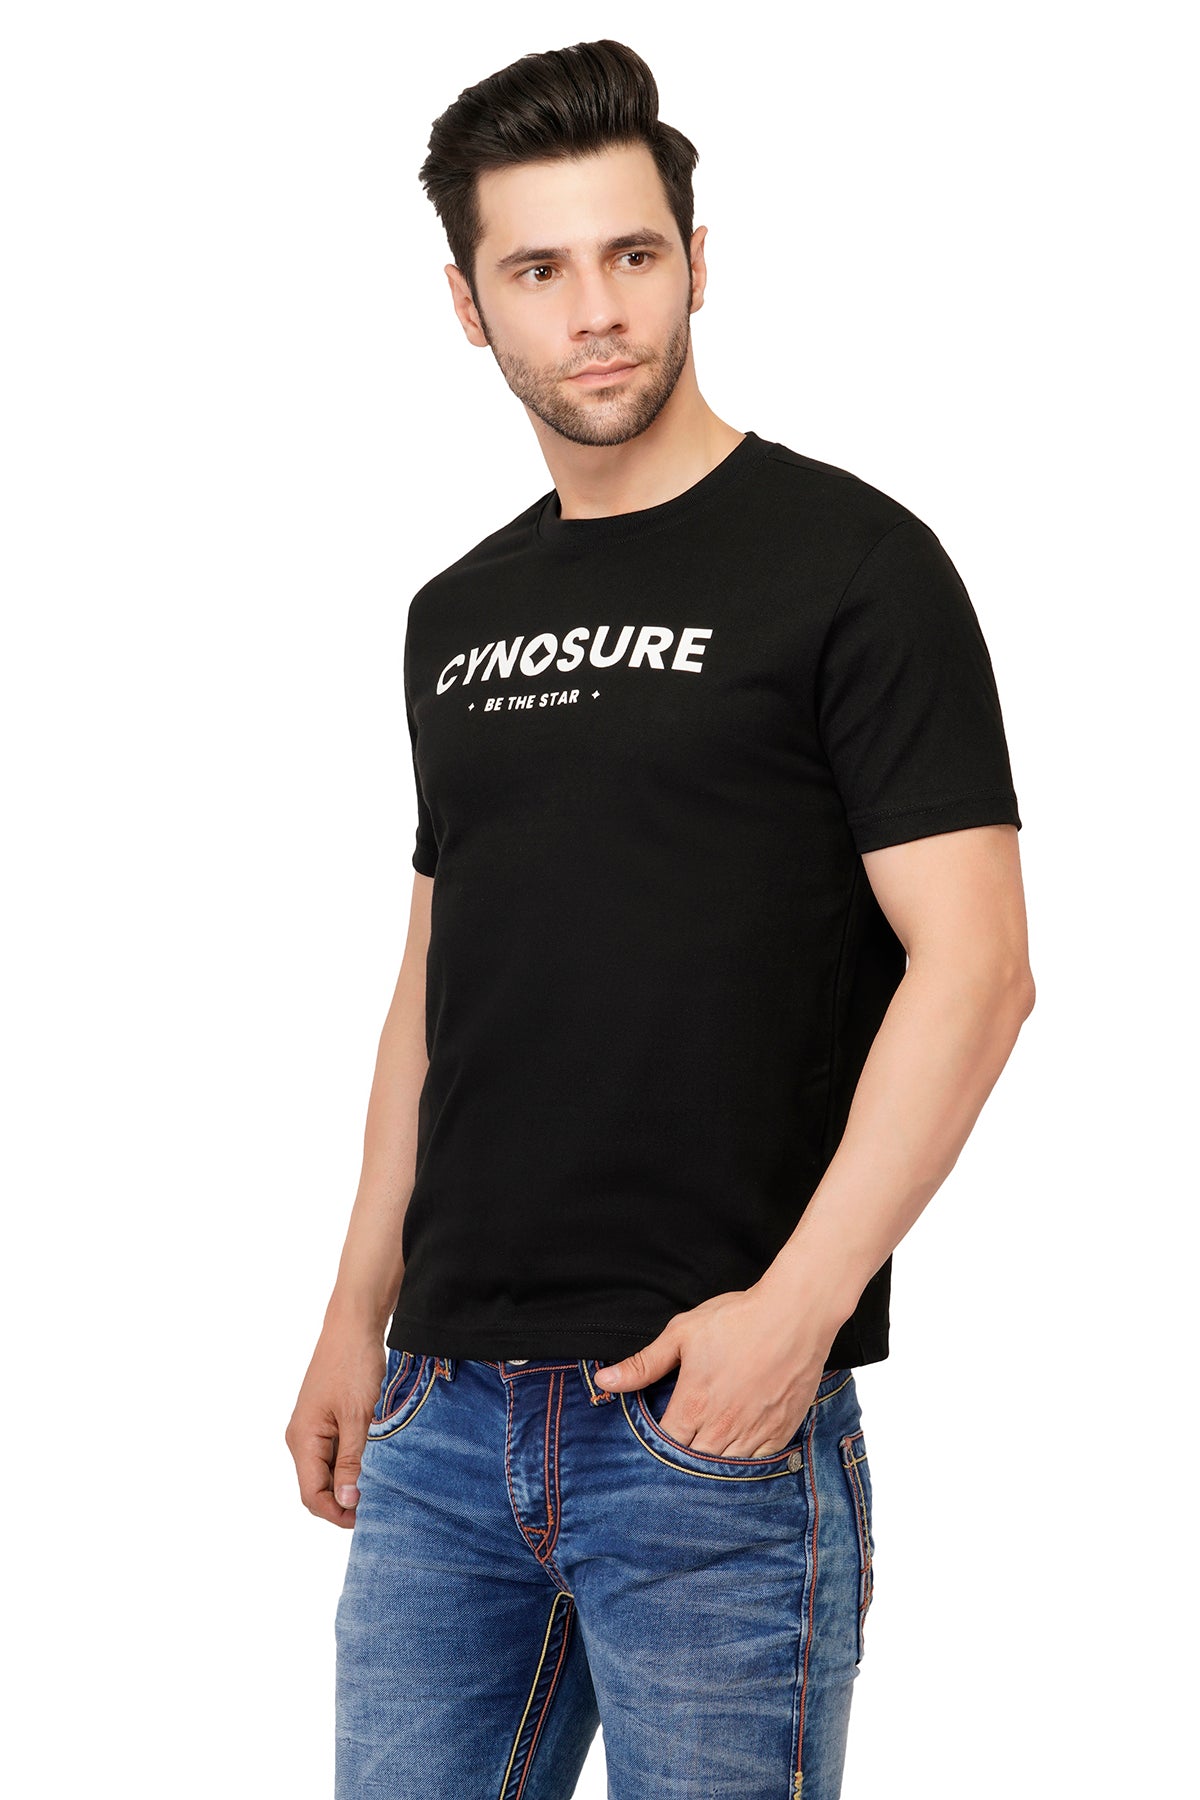 Men's CYNOSURE cotton t-shirt